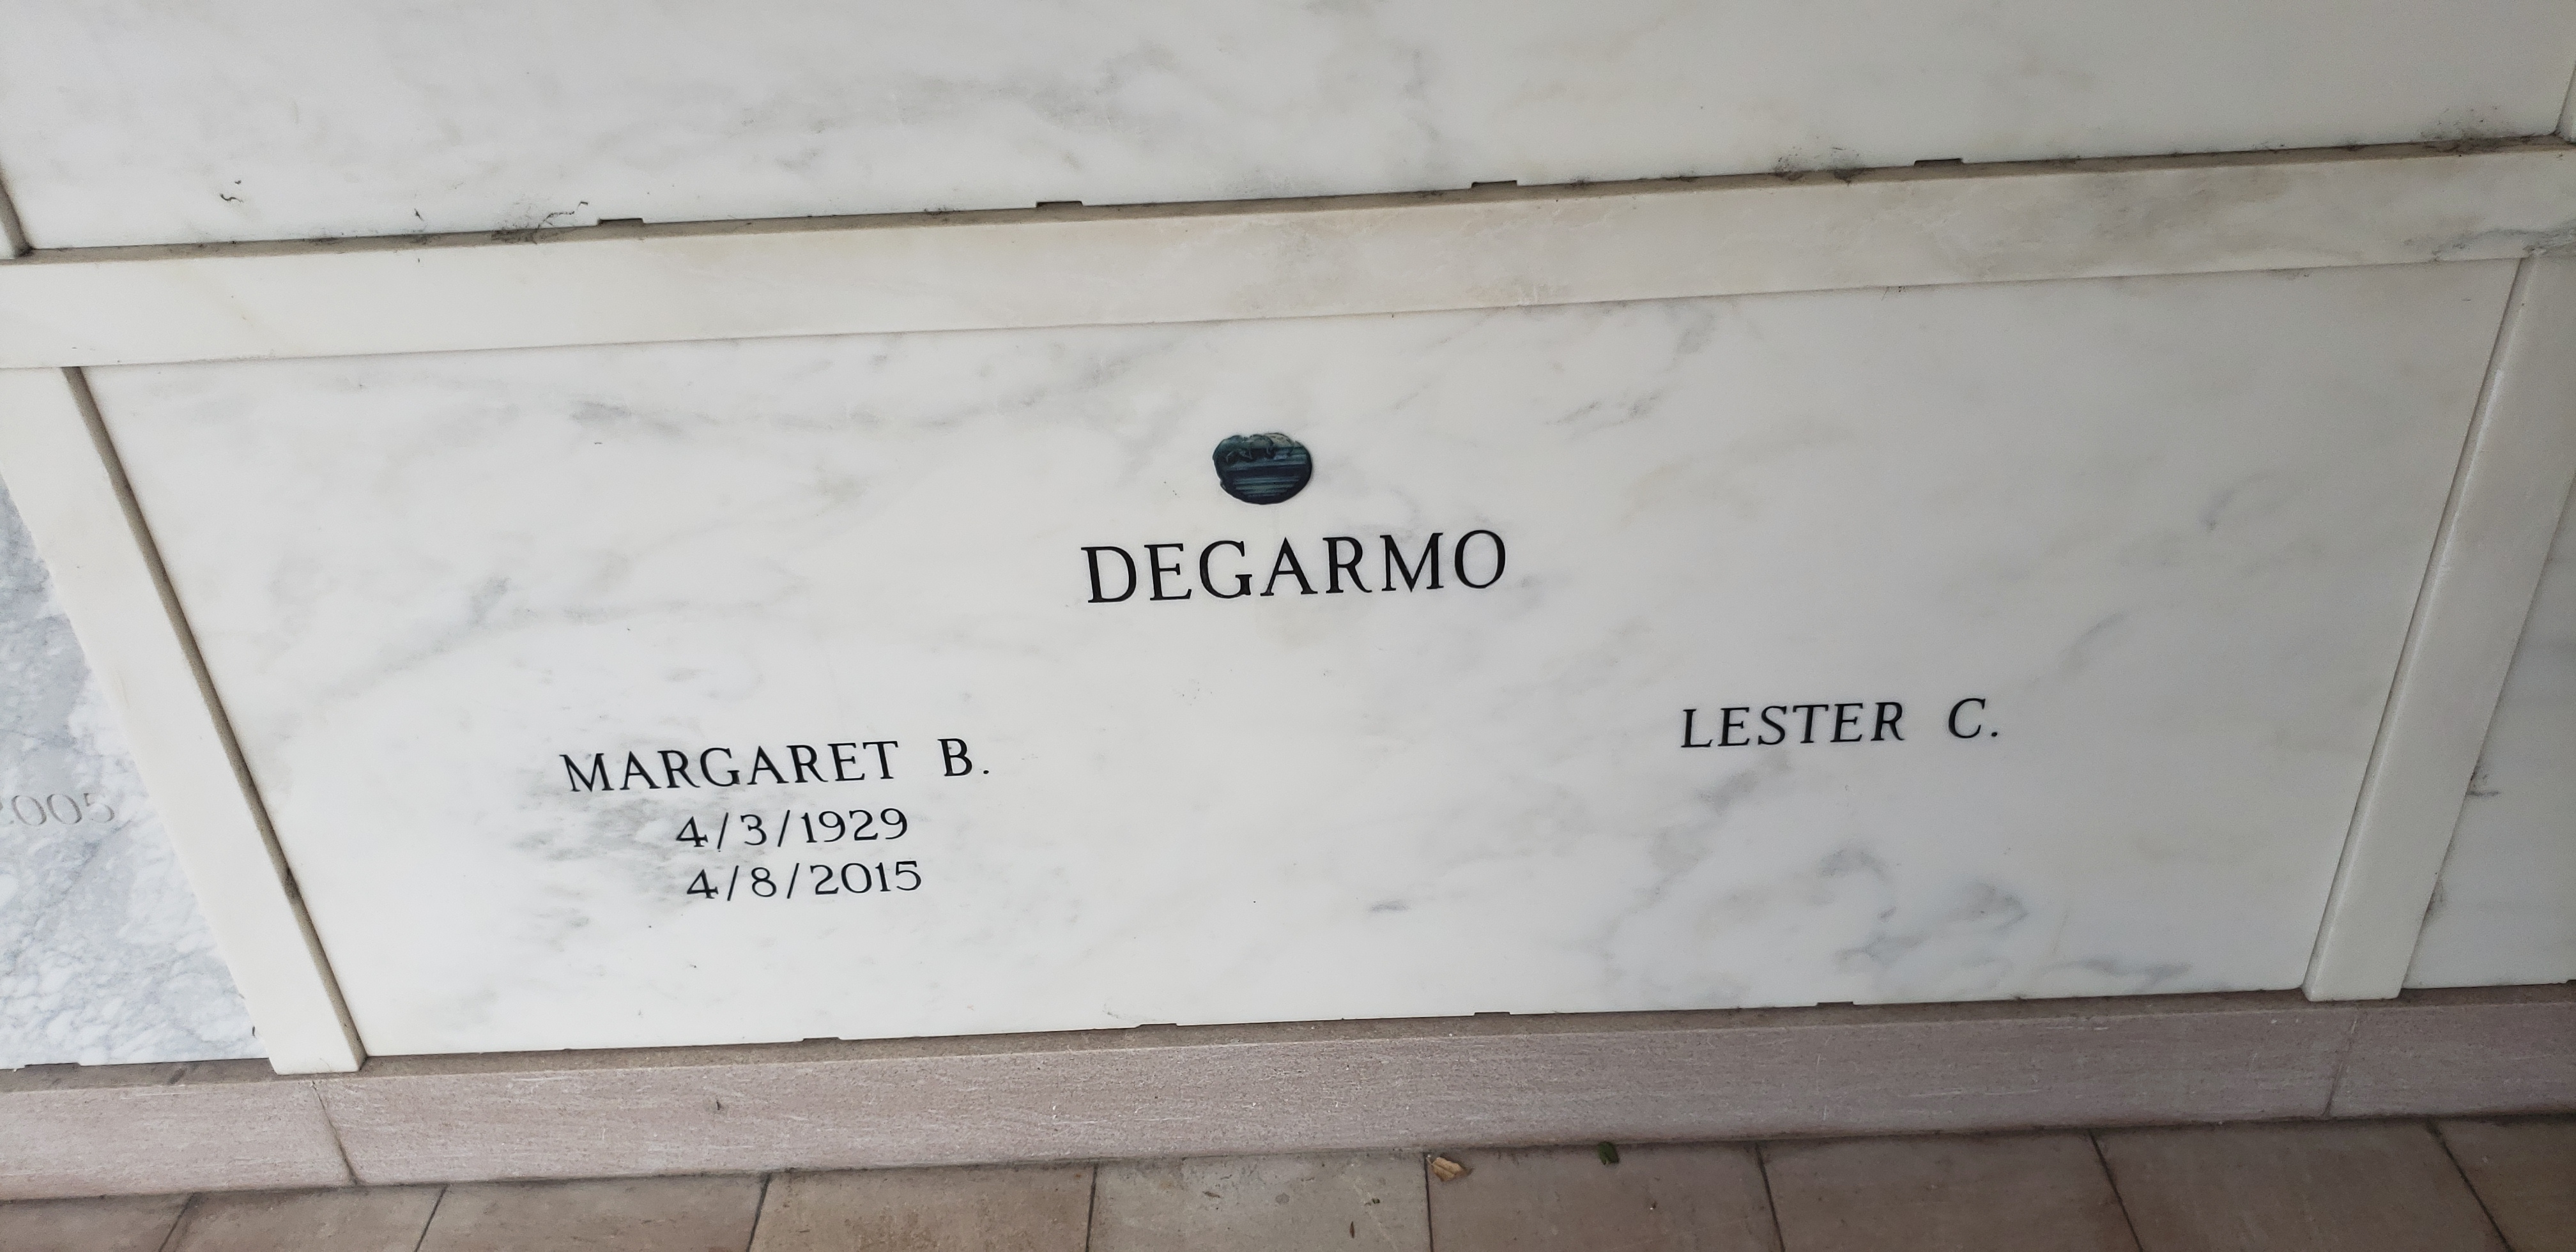 Margaret B Degarmo